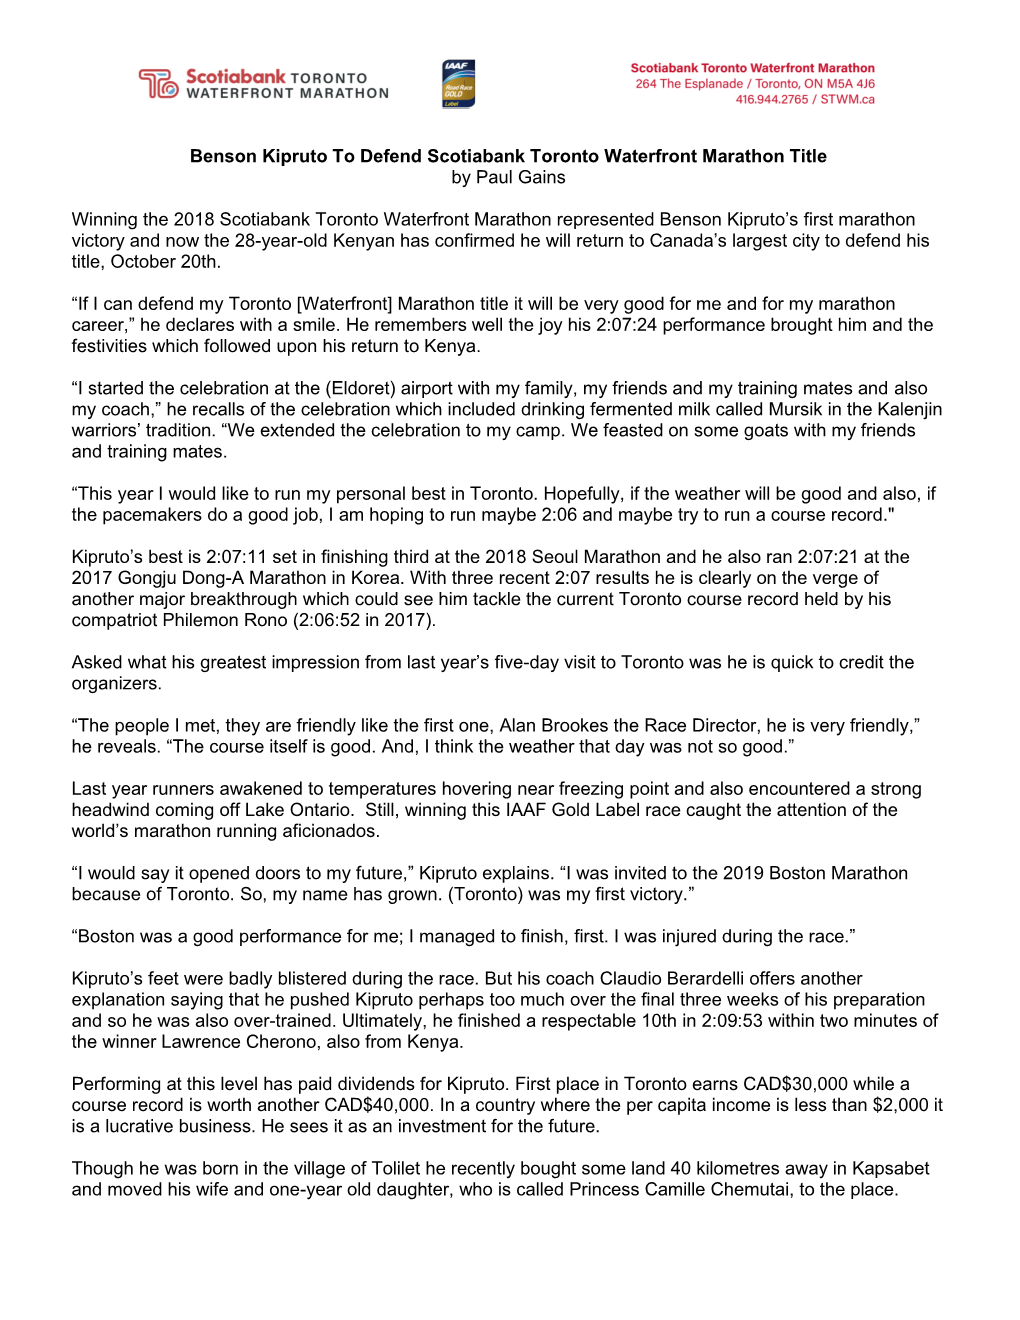 Benson Kipruto to Defend Scotiabank Toronto Waterfront Marathon Title by Paul Gains